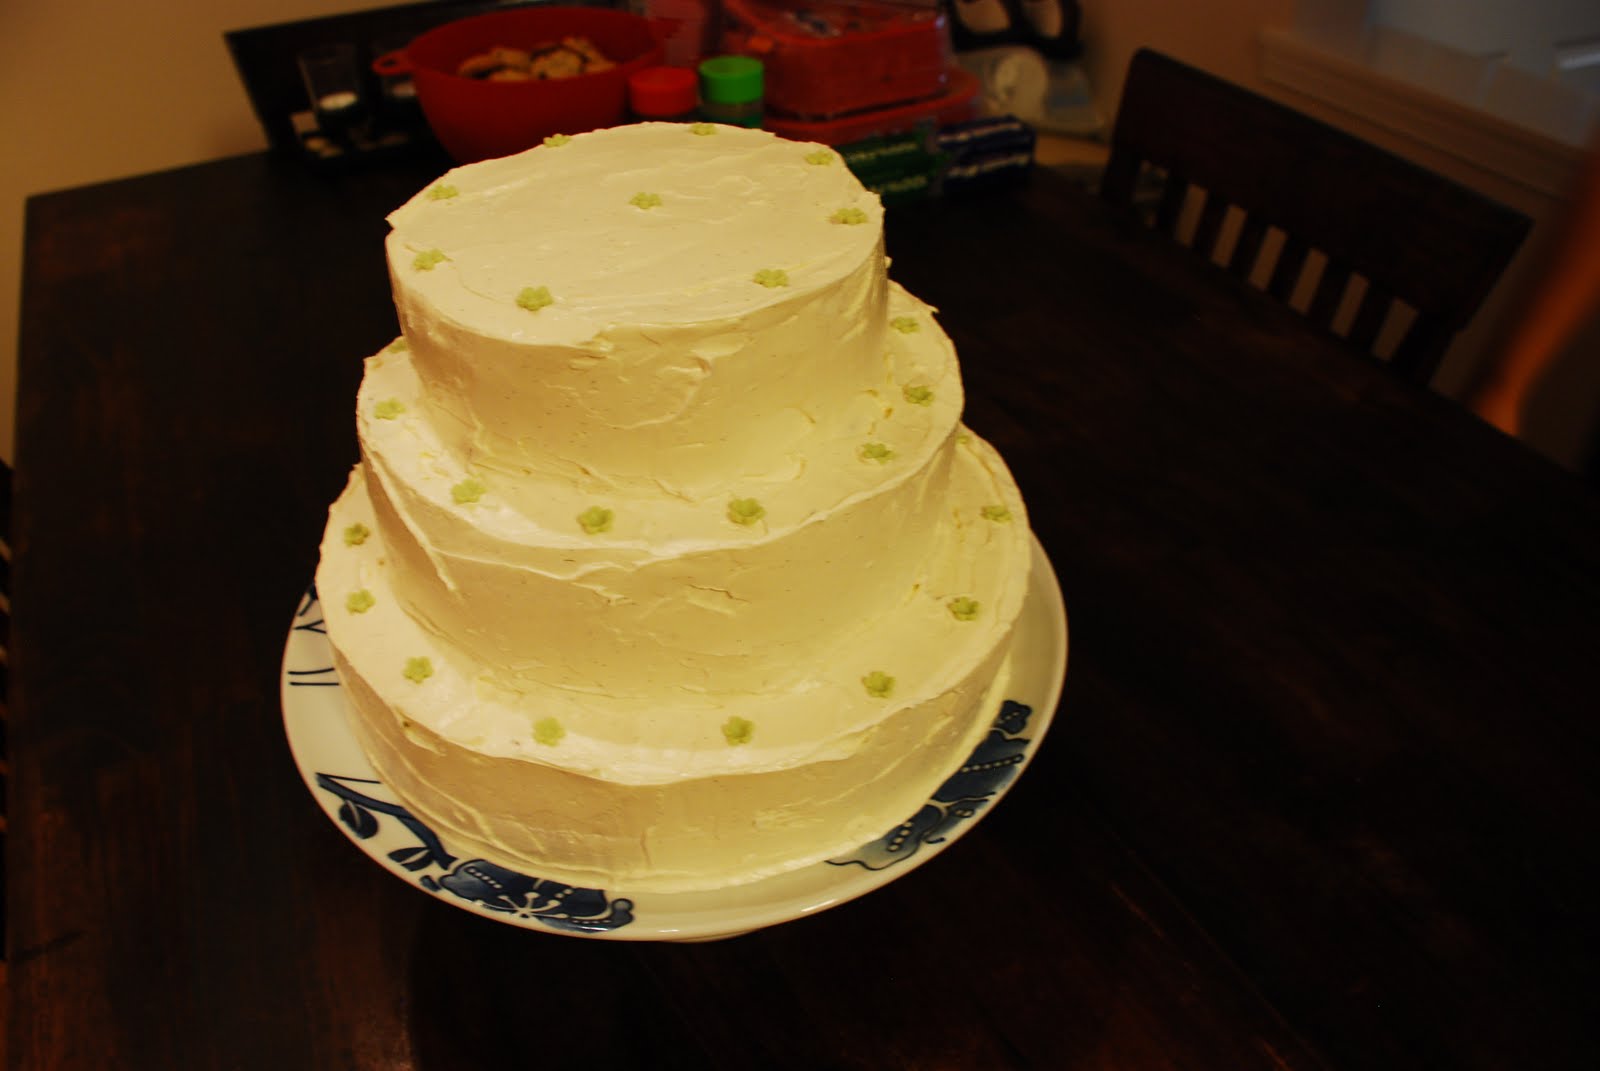 The Js wedding cake,